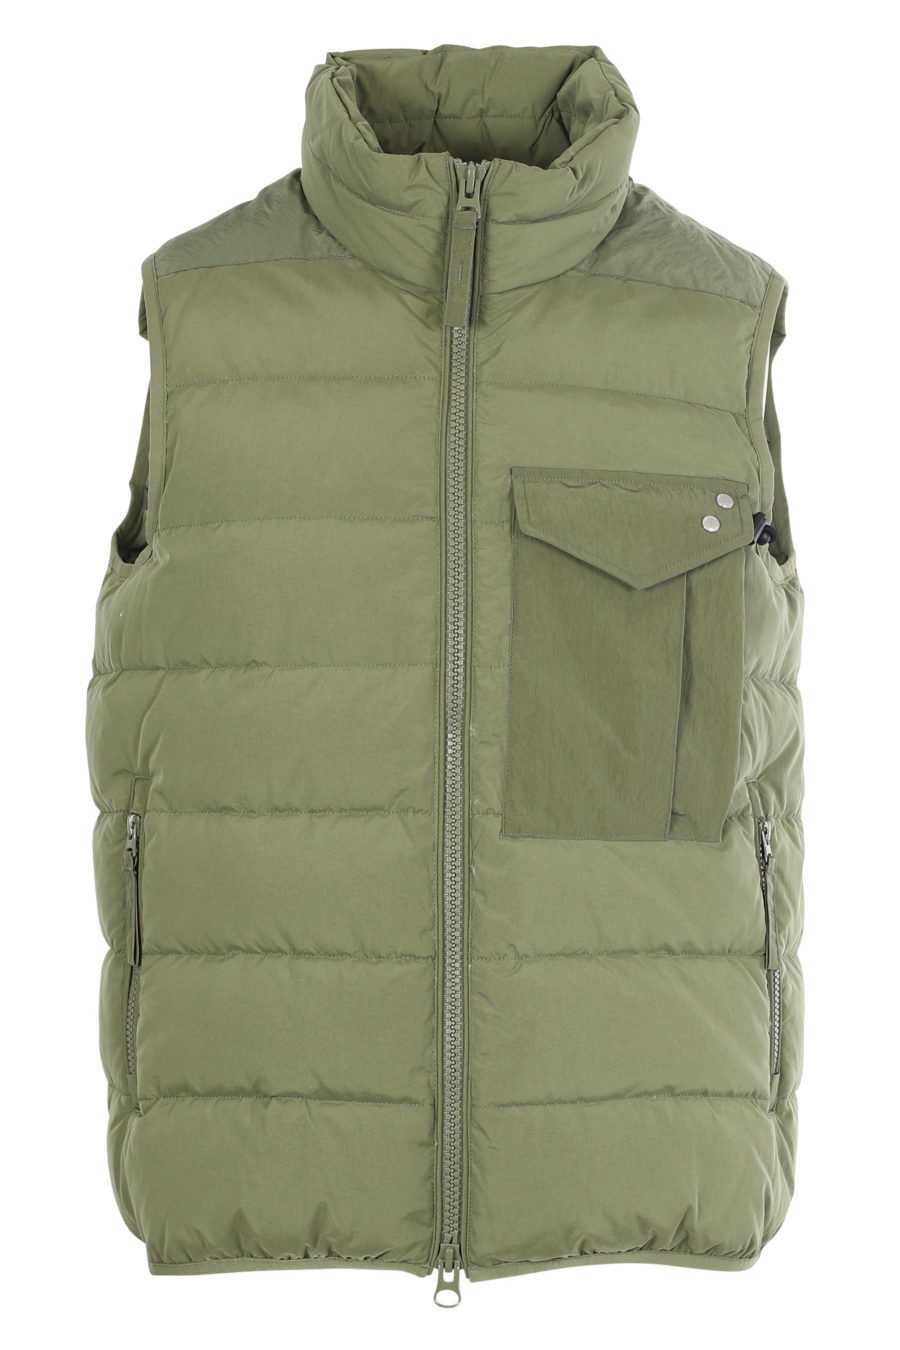 Military green tactical waistcoat - IMG 5413